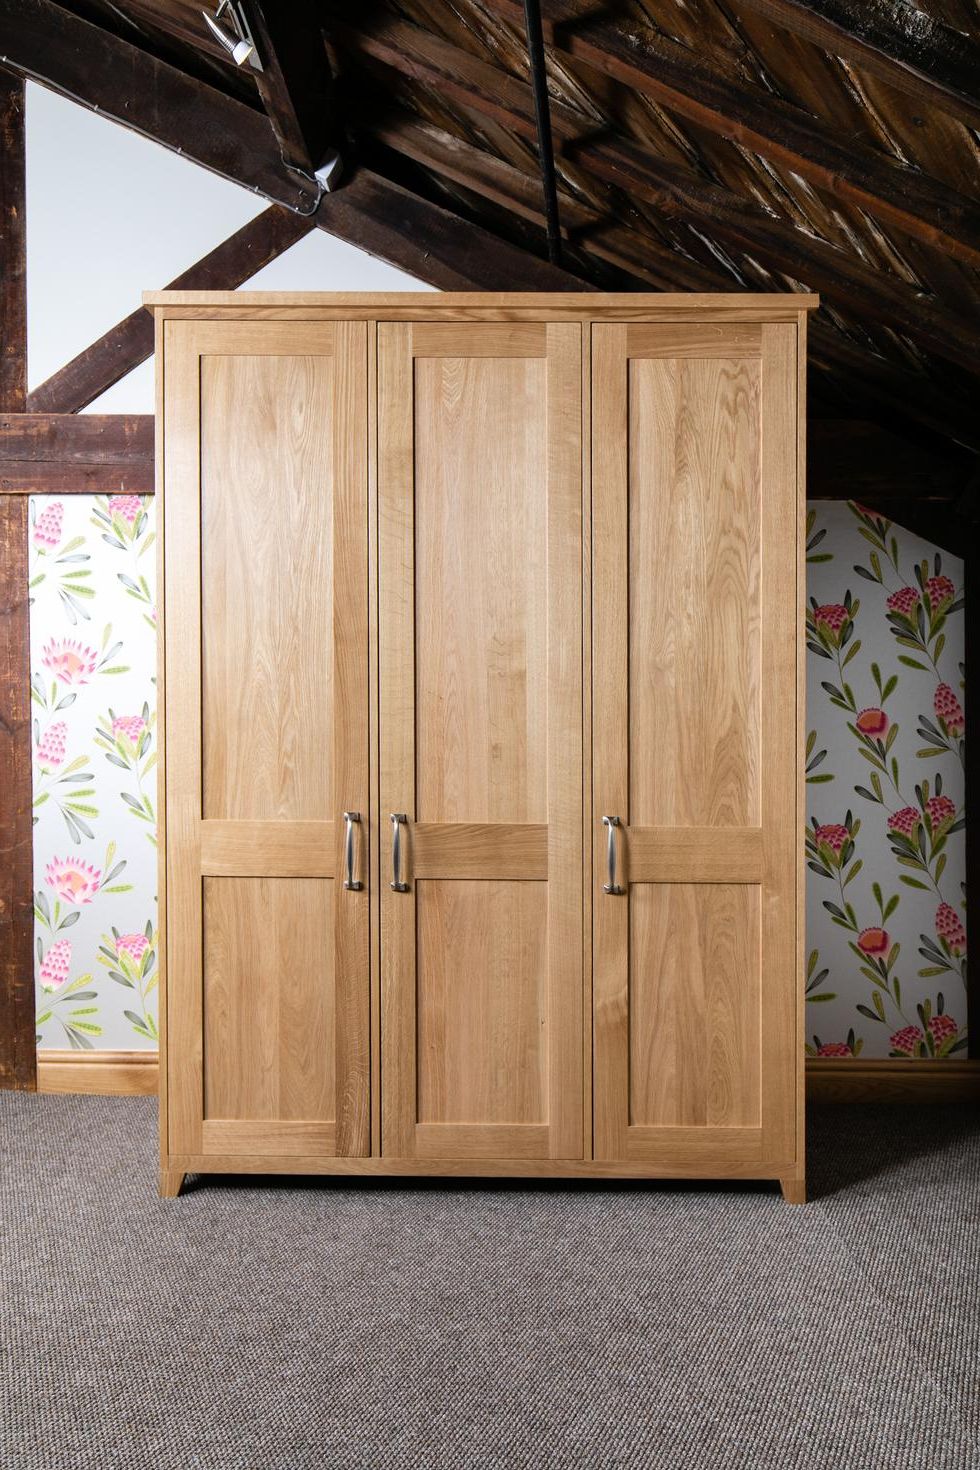 Masham 3 Door Wardrobe | Bespoke Hardwood Furniture From Treske With Oak 3 Door Wardrobes (View 13 of 20)